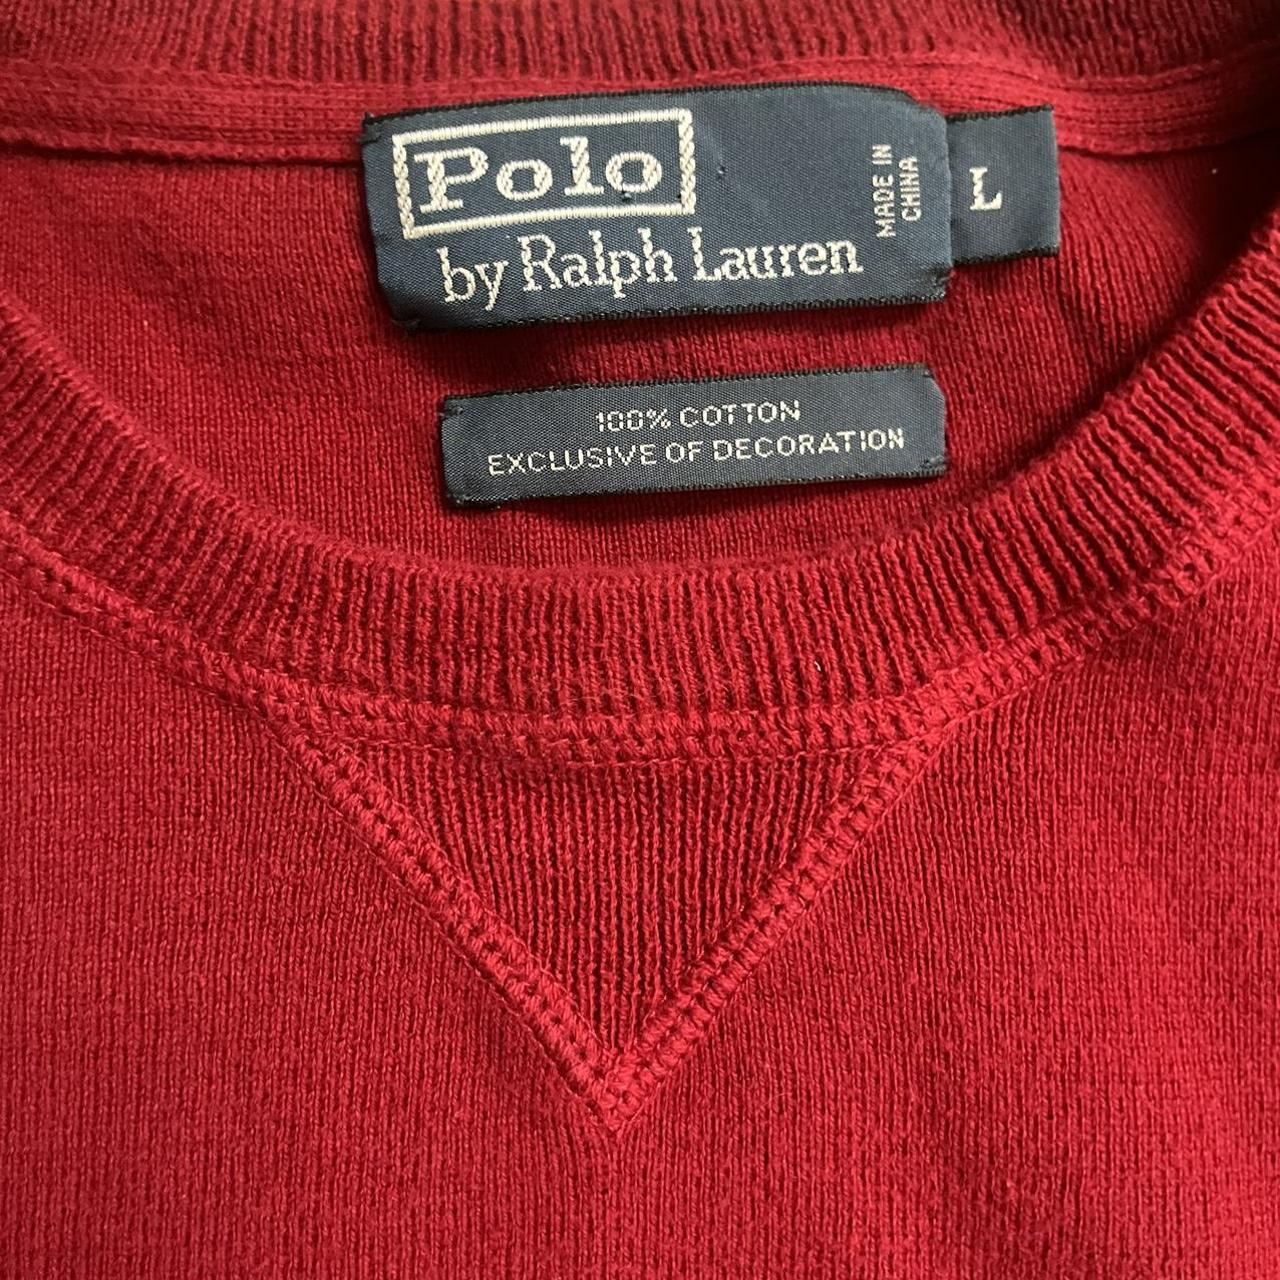 Polo Raulph Lauren sweater Red... - Depop